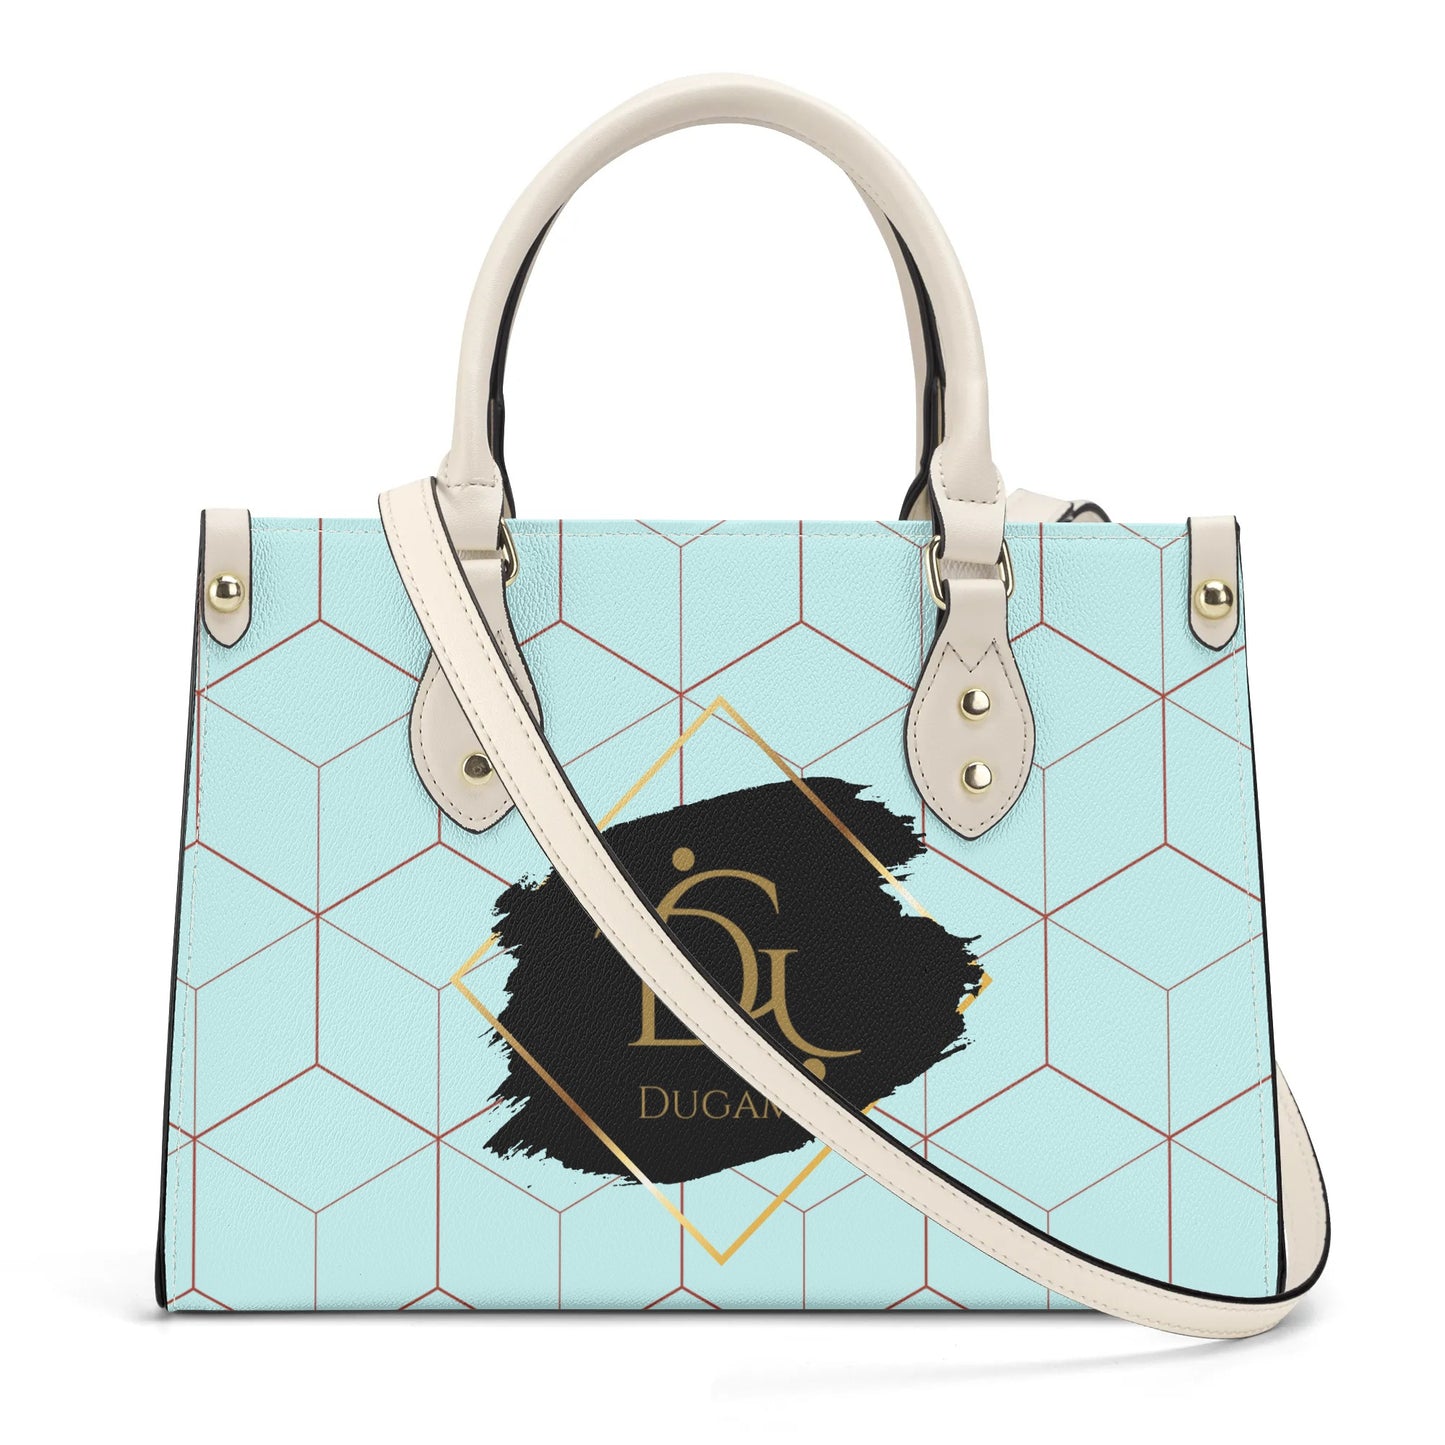 DuGamii Luxury Women's Clear Water Blue PU Handbag With Shoulder Strap